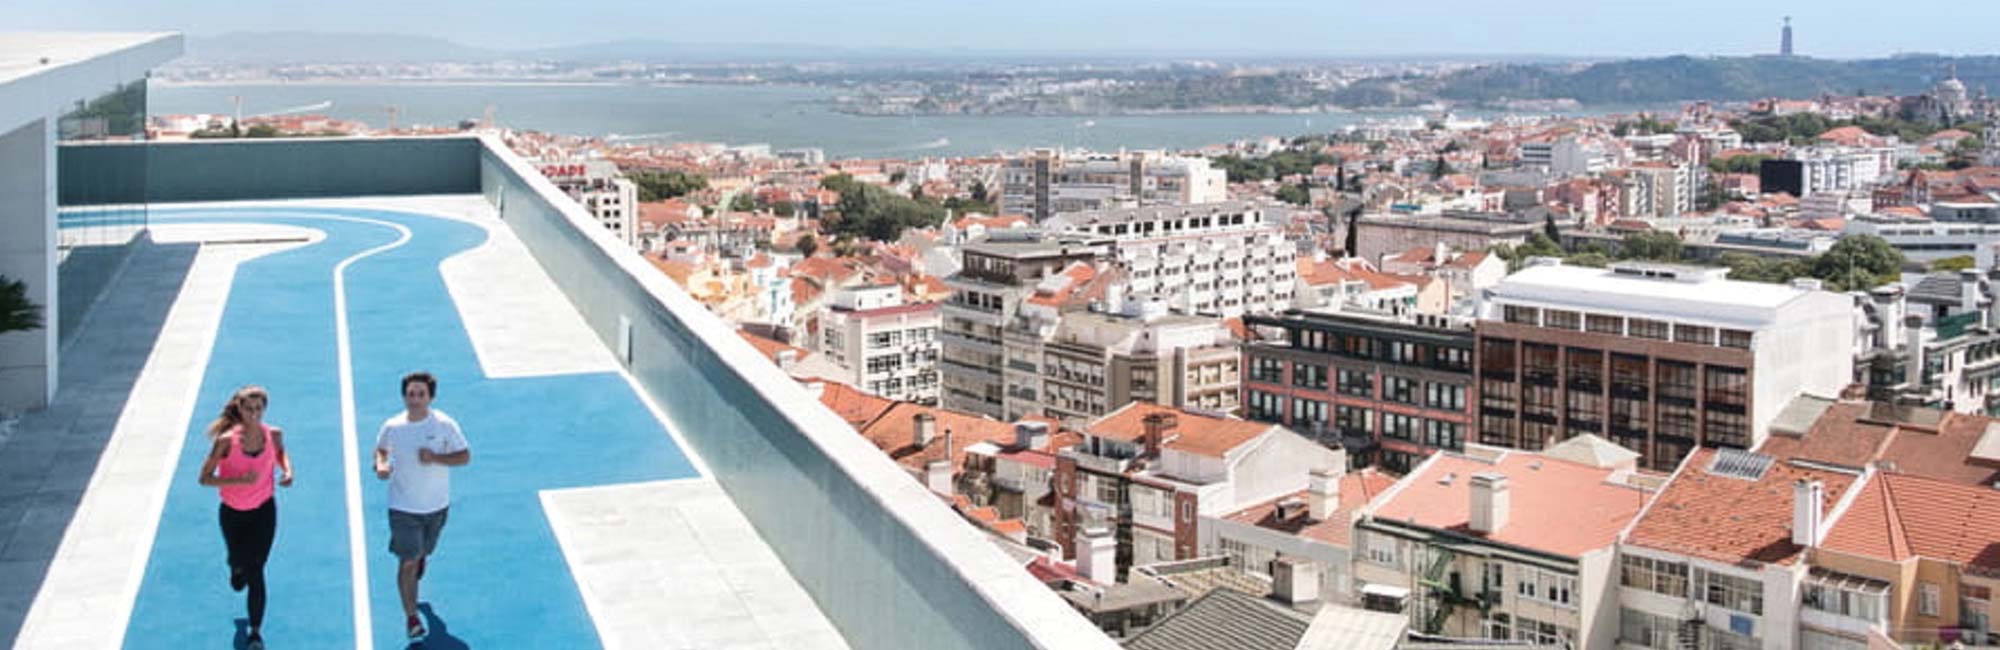 Four Seasons Hotel Ritz Lisbon Banner